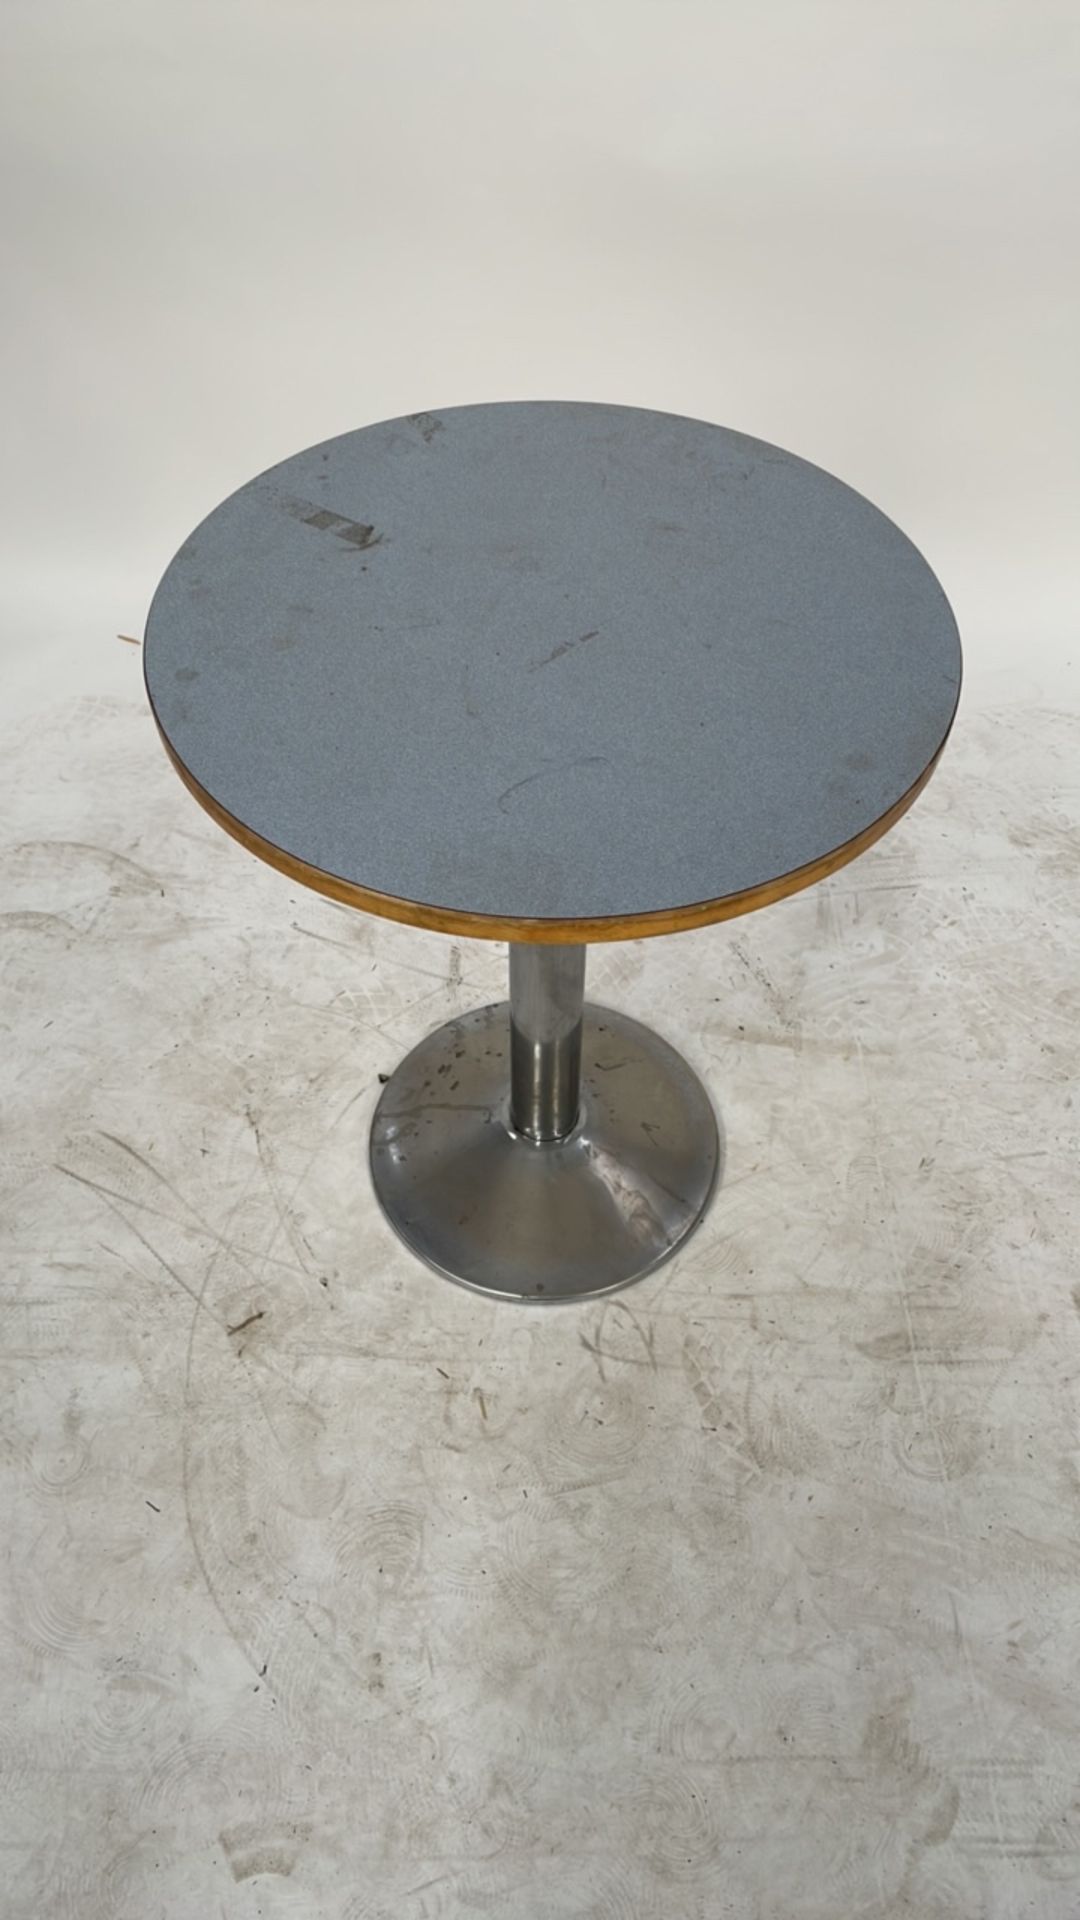 Light gray Table